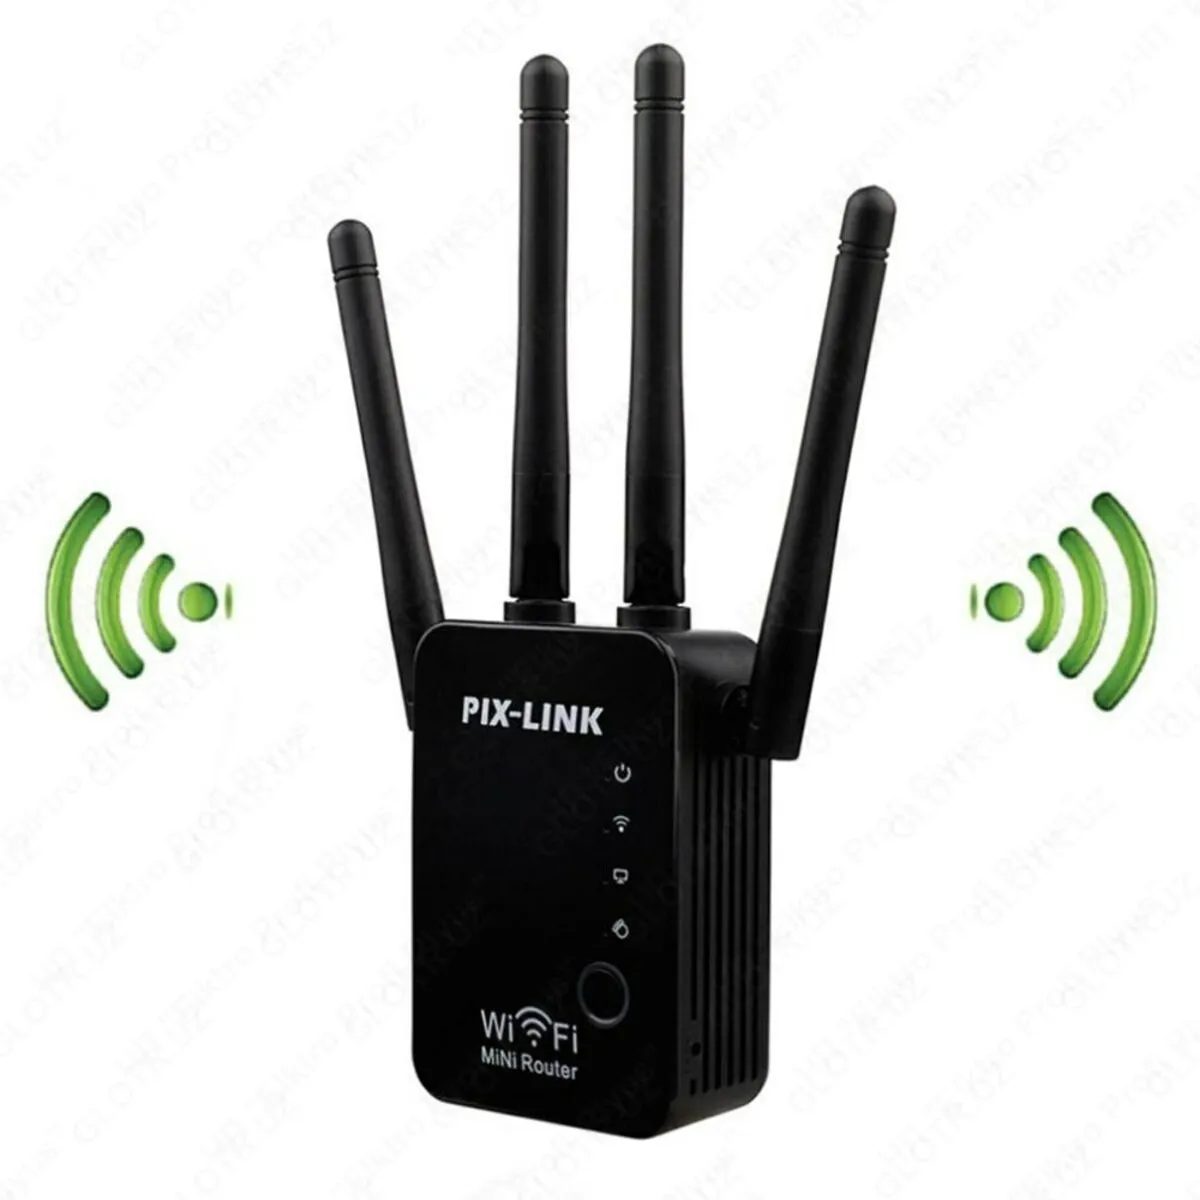 Wi-Fi signal kuchaytirgichi PIX-LINK LV-WR16#1